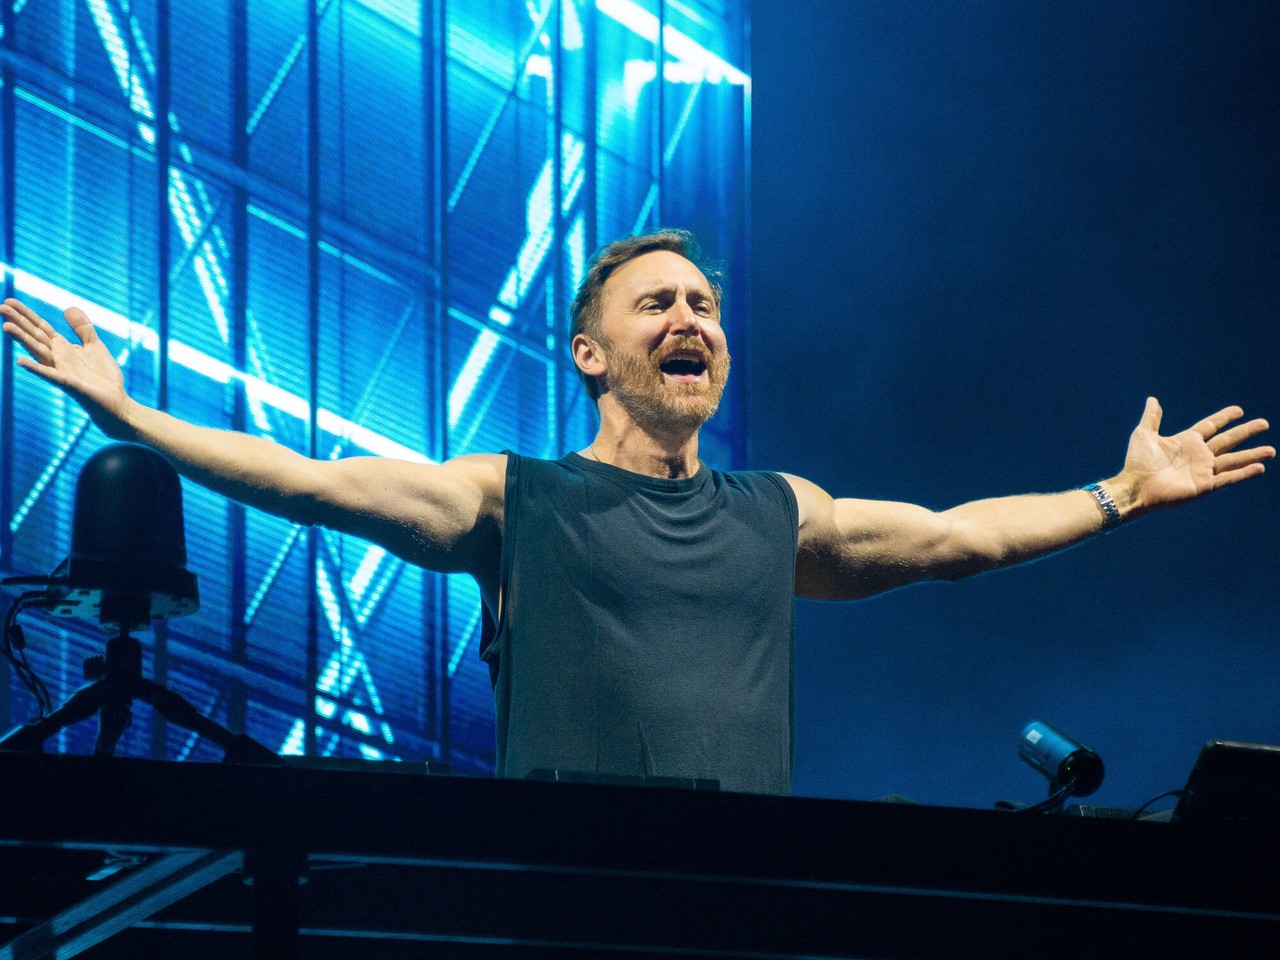 David Guetta claims world no.1 DJ title in DJ Mag’s Top 100 DJs poll